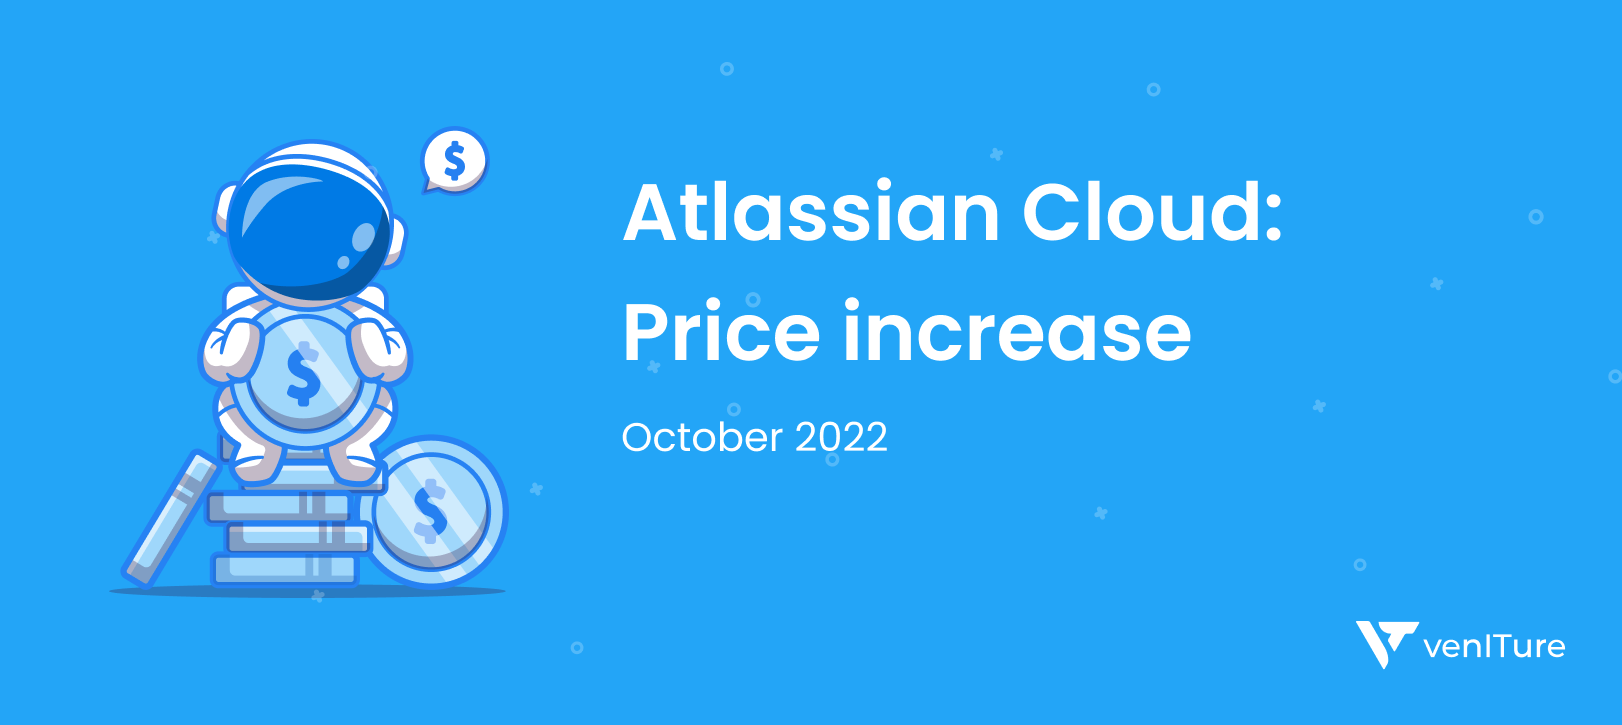 Information on Atlassian Cloud price increase in October